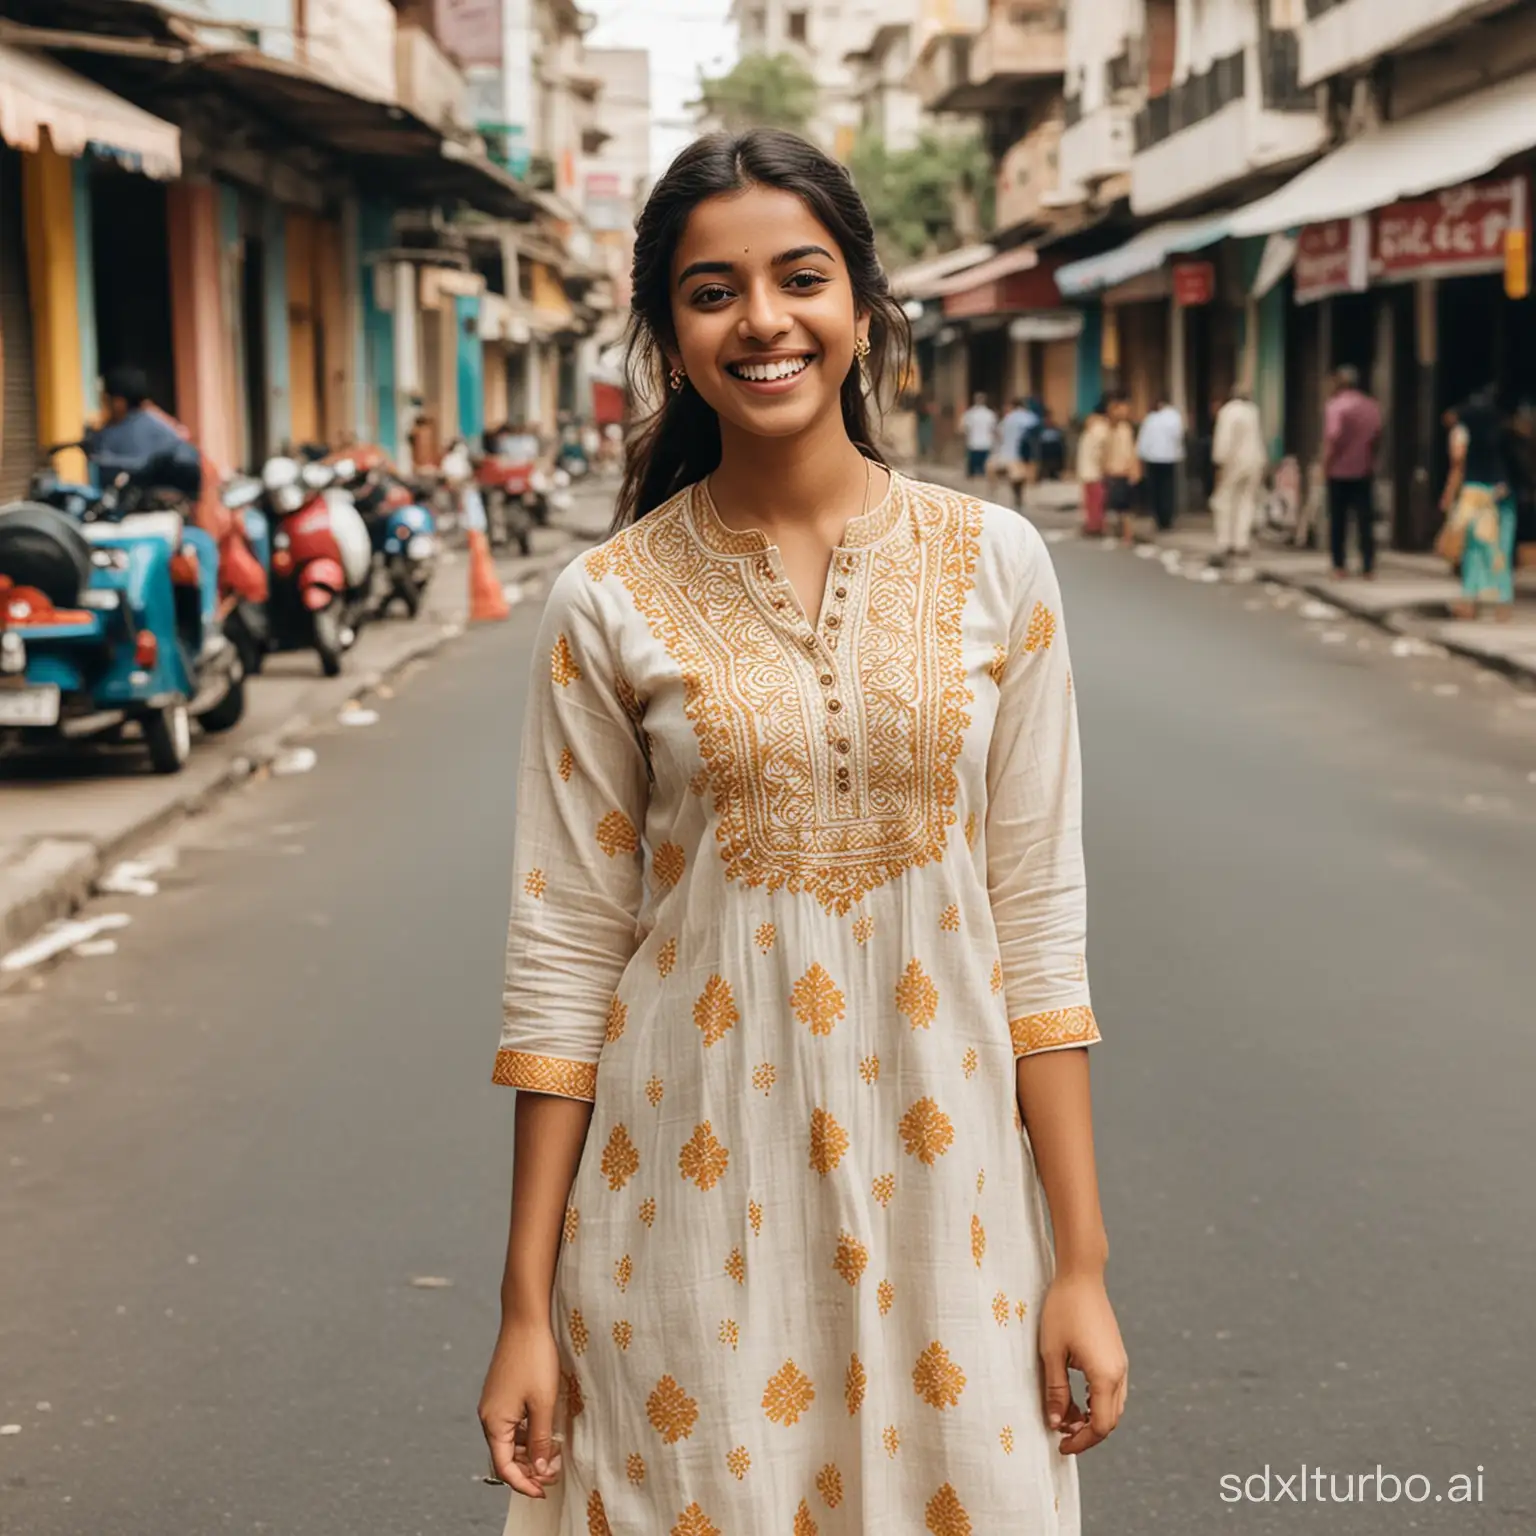 Smiling-Indian-Girl-in-Kurta-on-Urban-Street